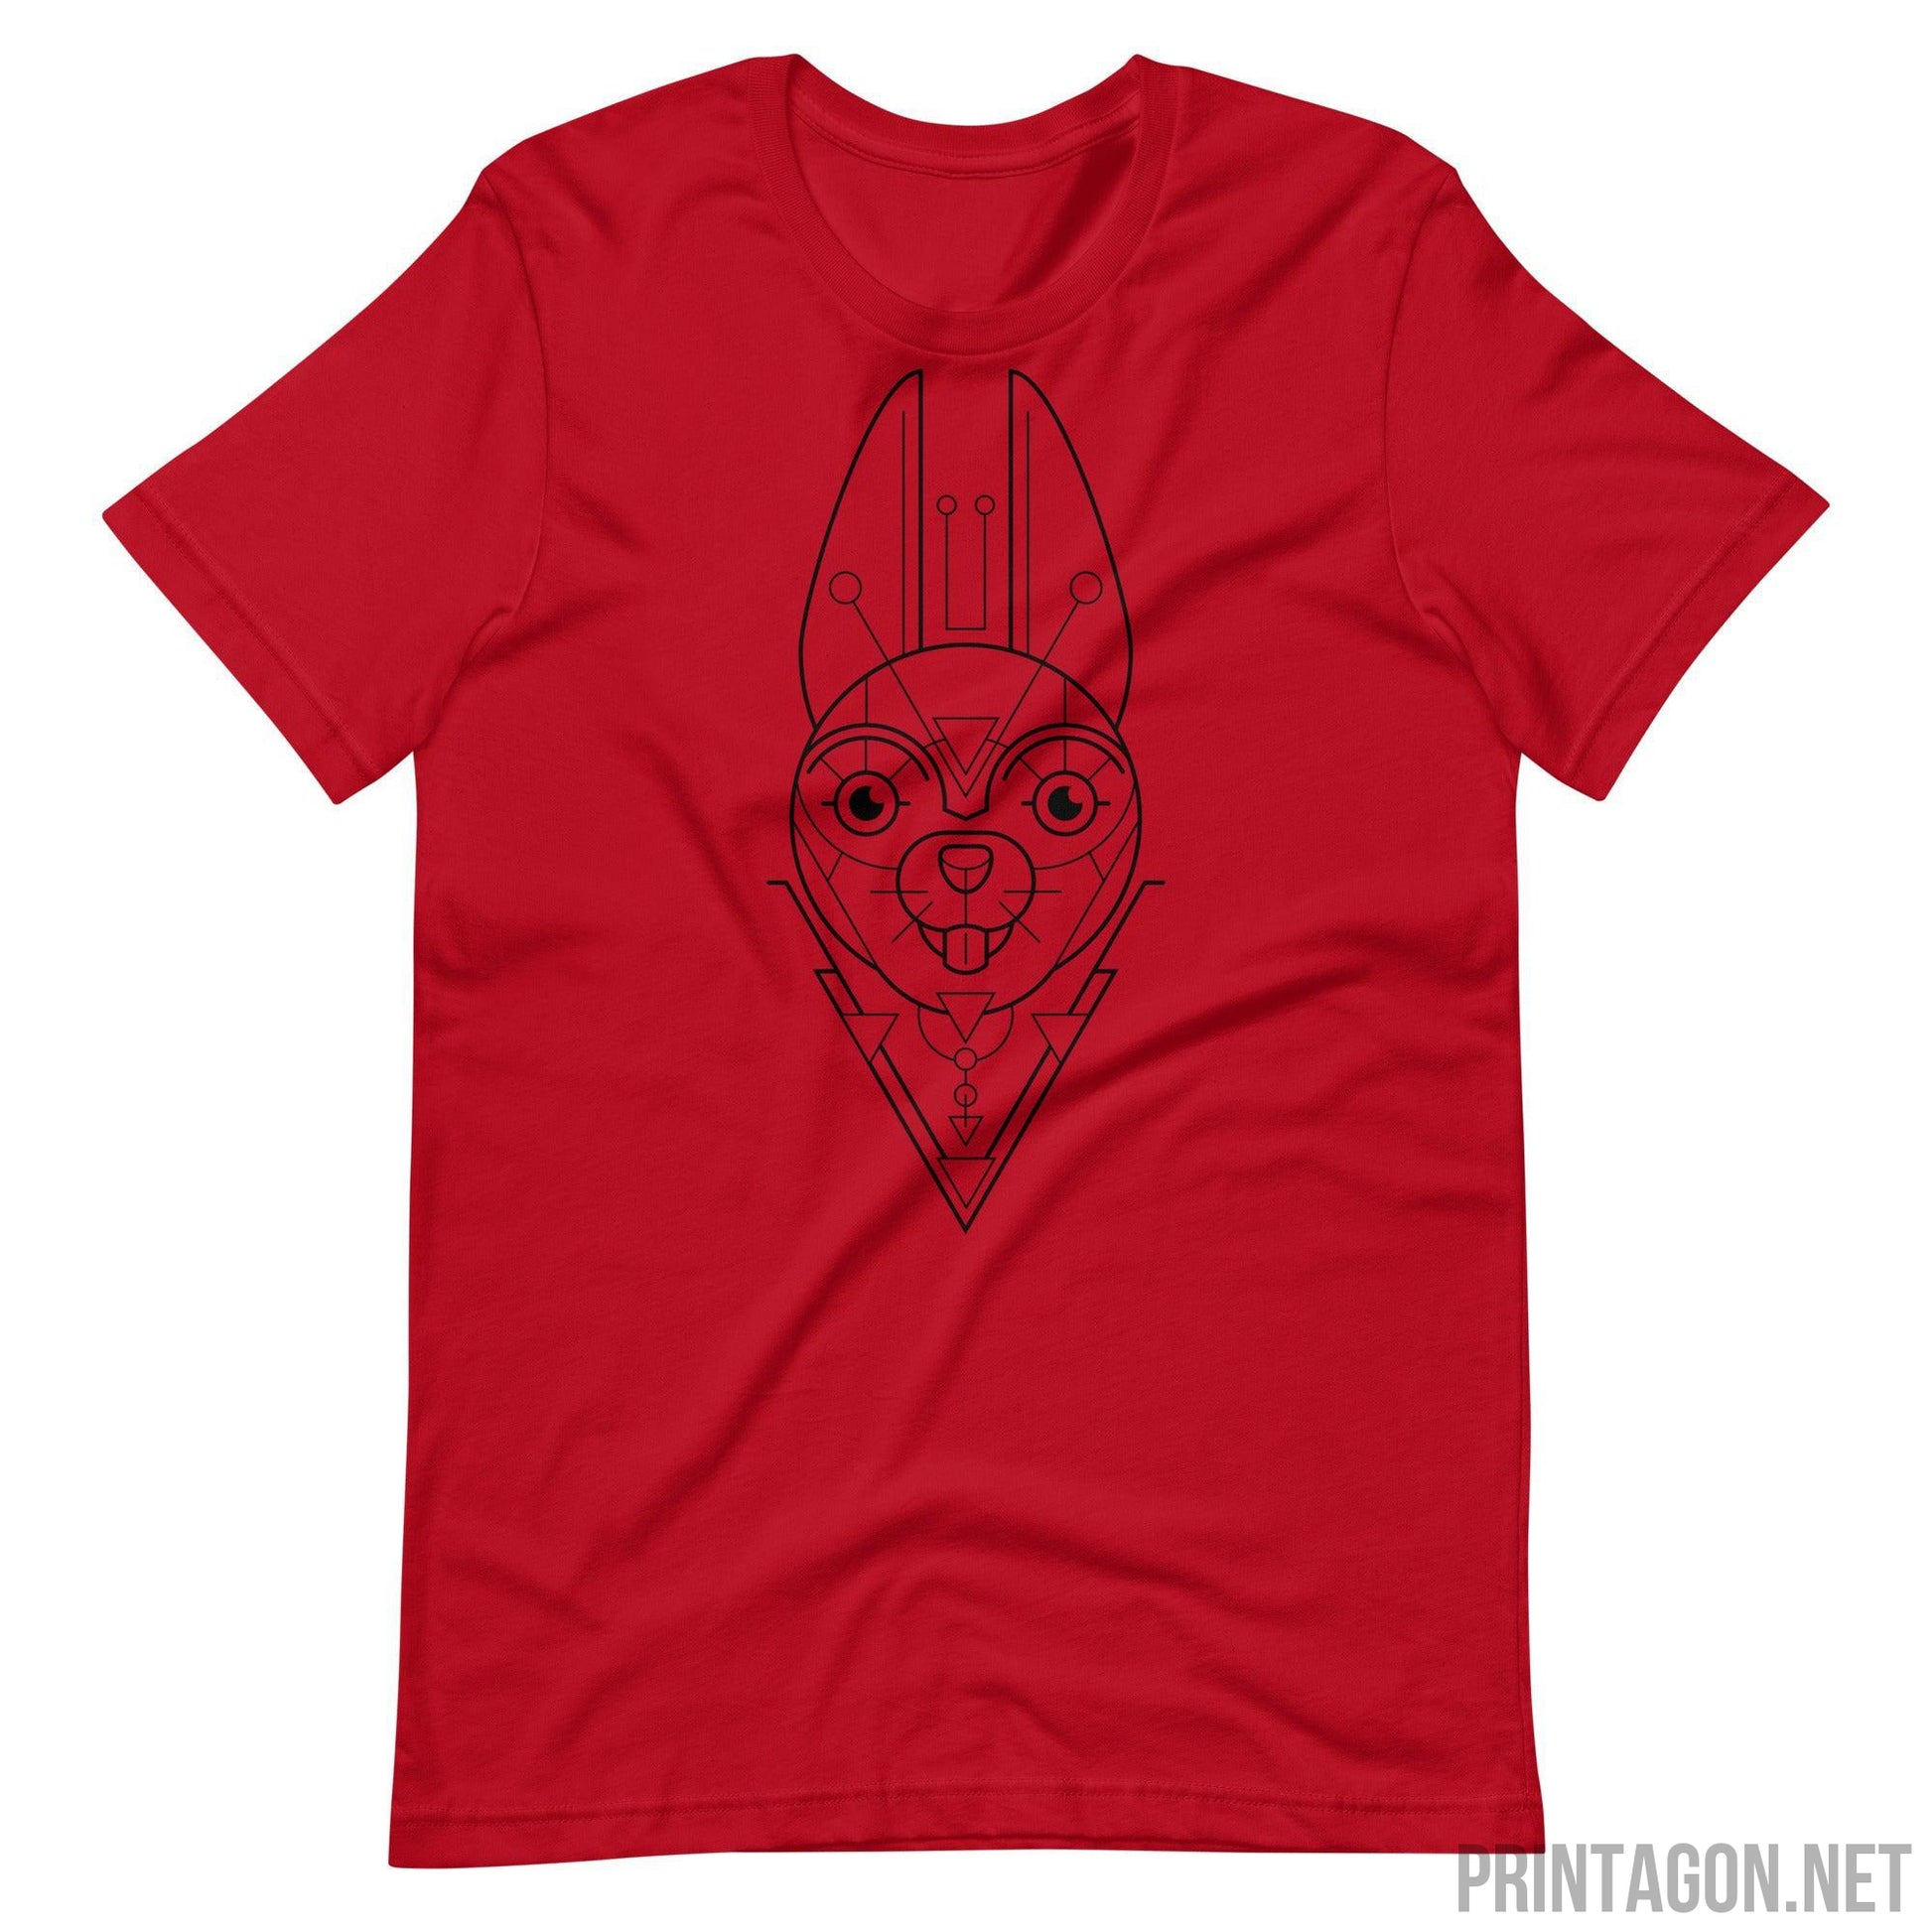 Sacred Geometric Rabbit - Unisex T-shirt - Red / XS Printagon